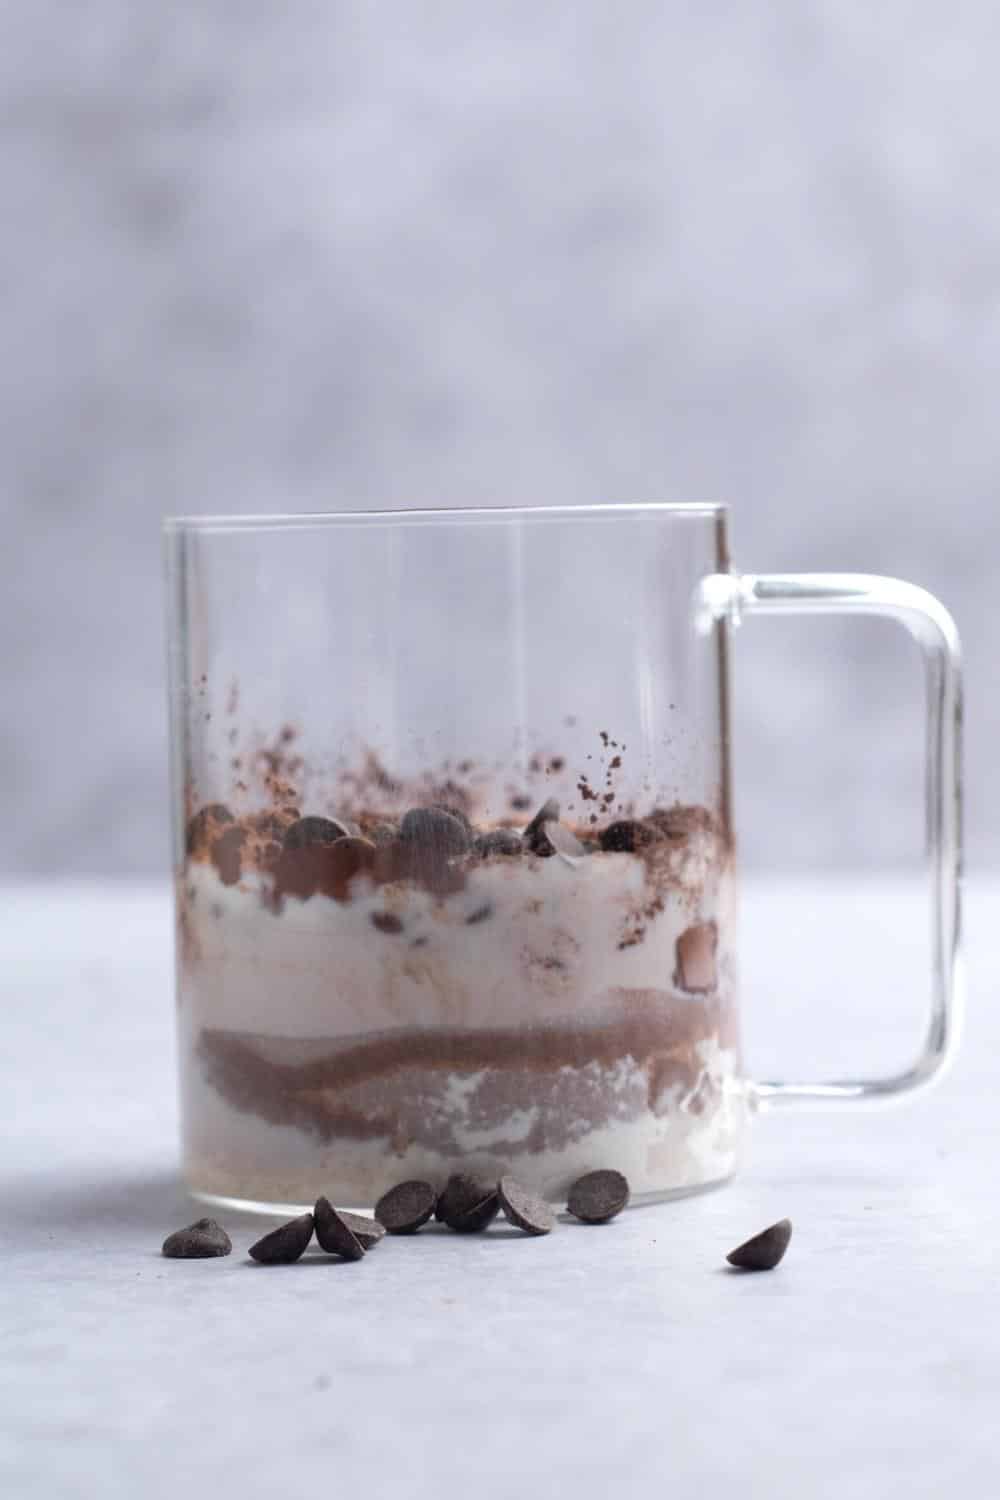 A glass mug filled with chocolate protein mug cake ingredients.